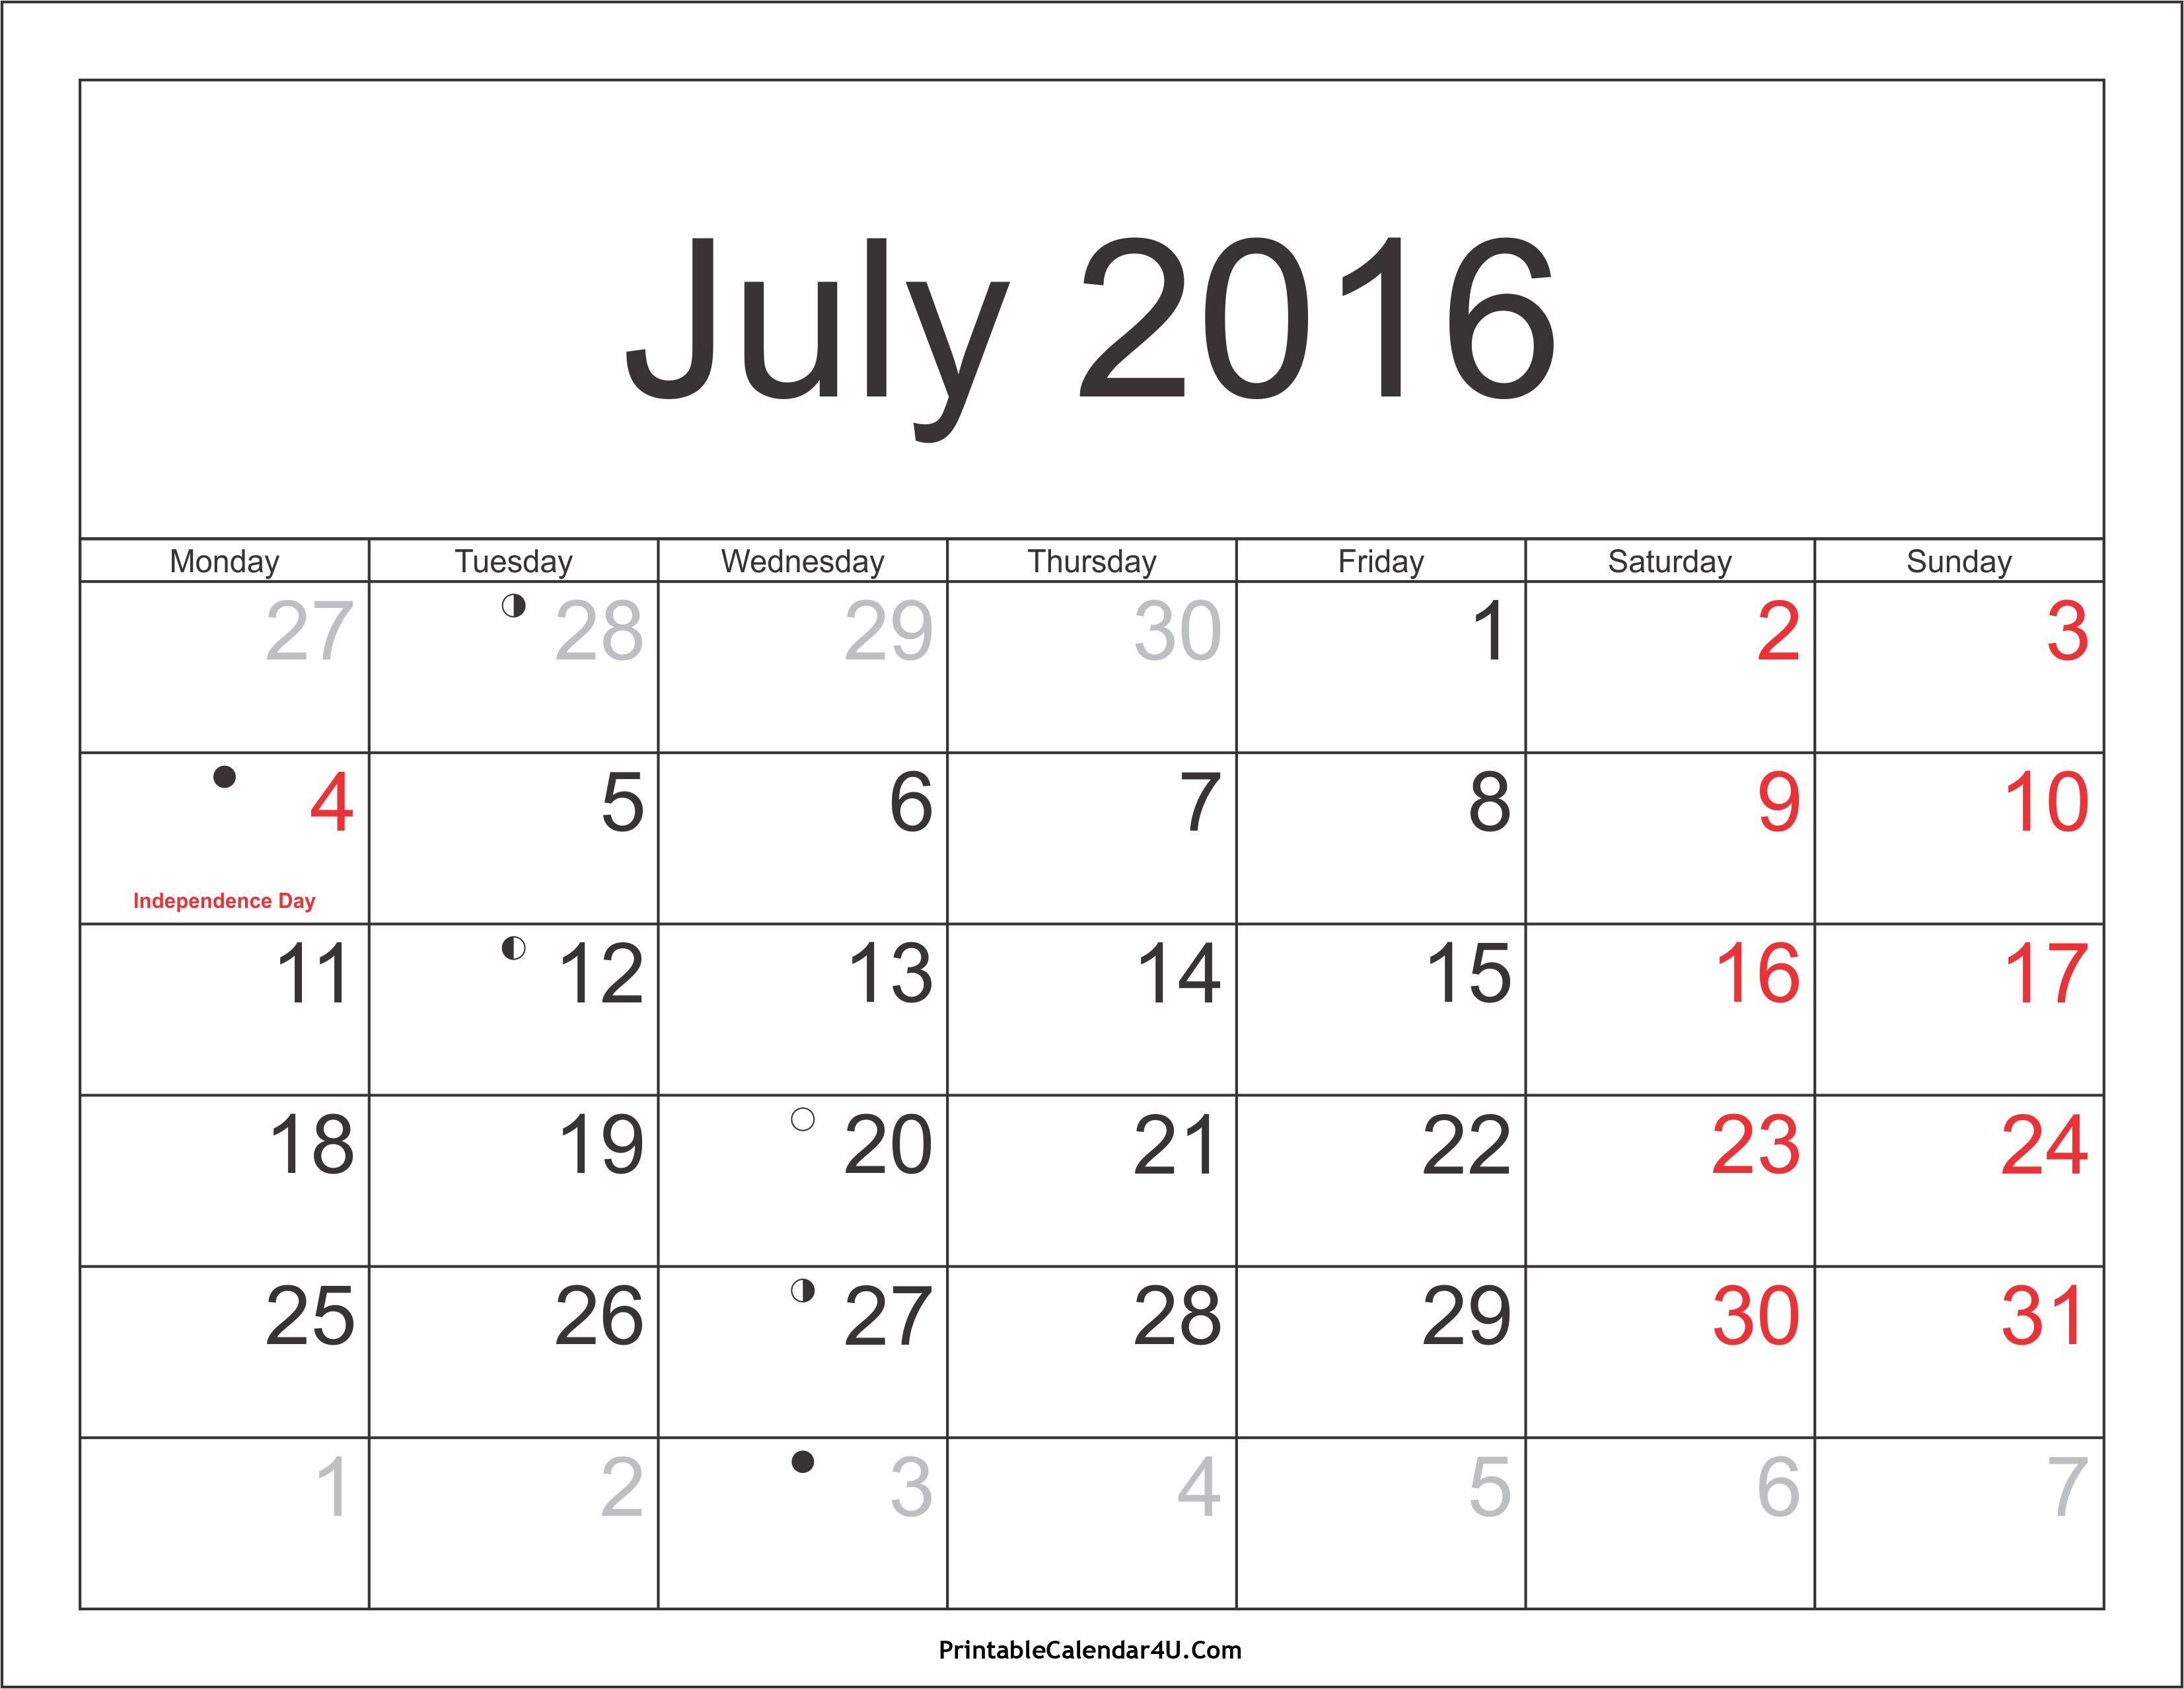 July Calendar 2016 Image